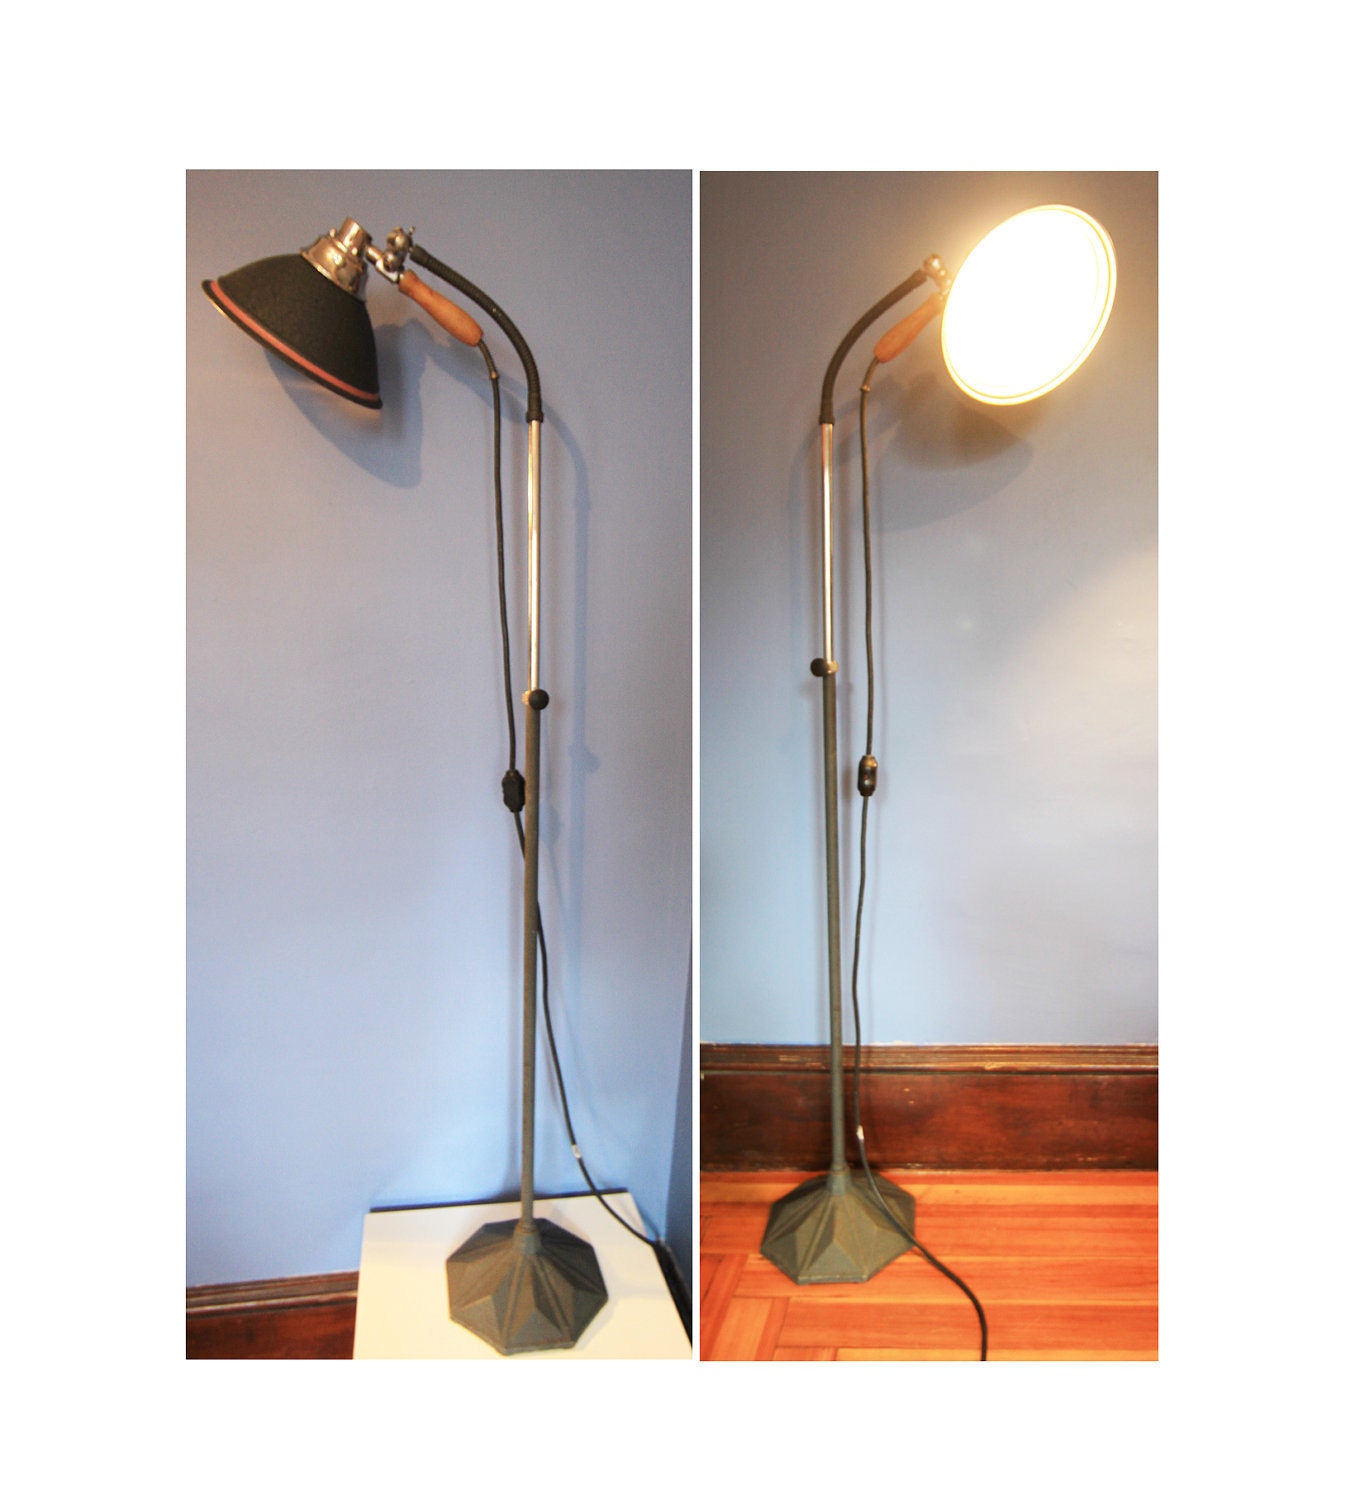  Floor Lamps on Vintage Industrial Floor Lamp Adjustable By Thearbitrarium